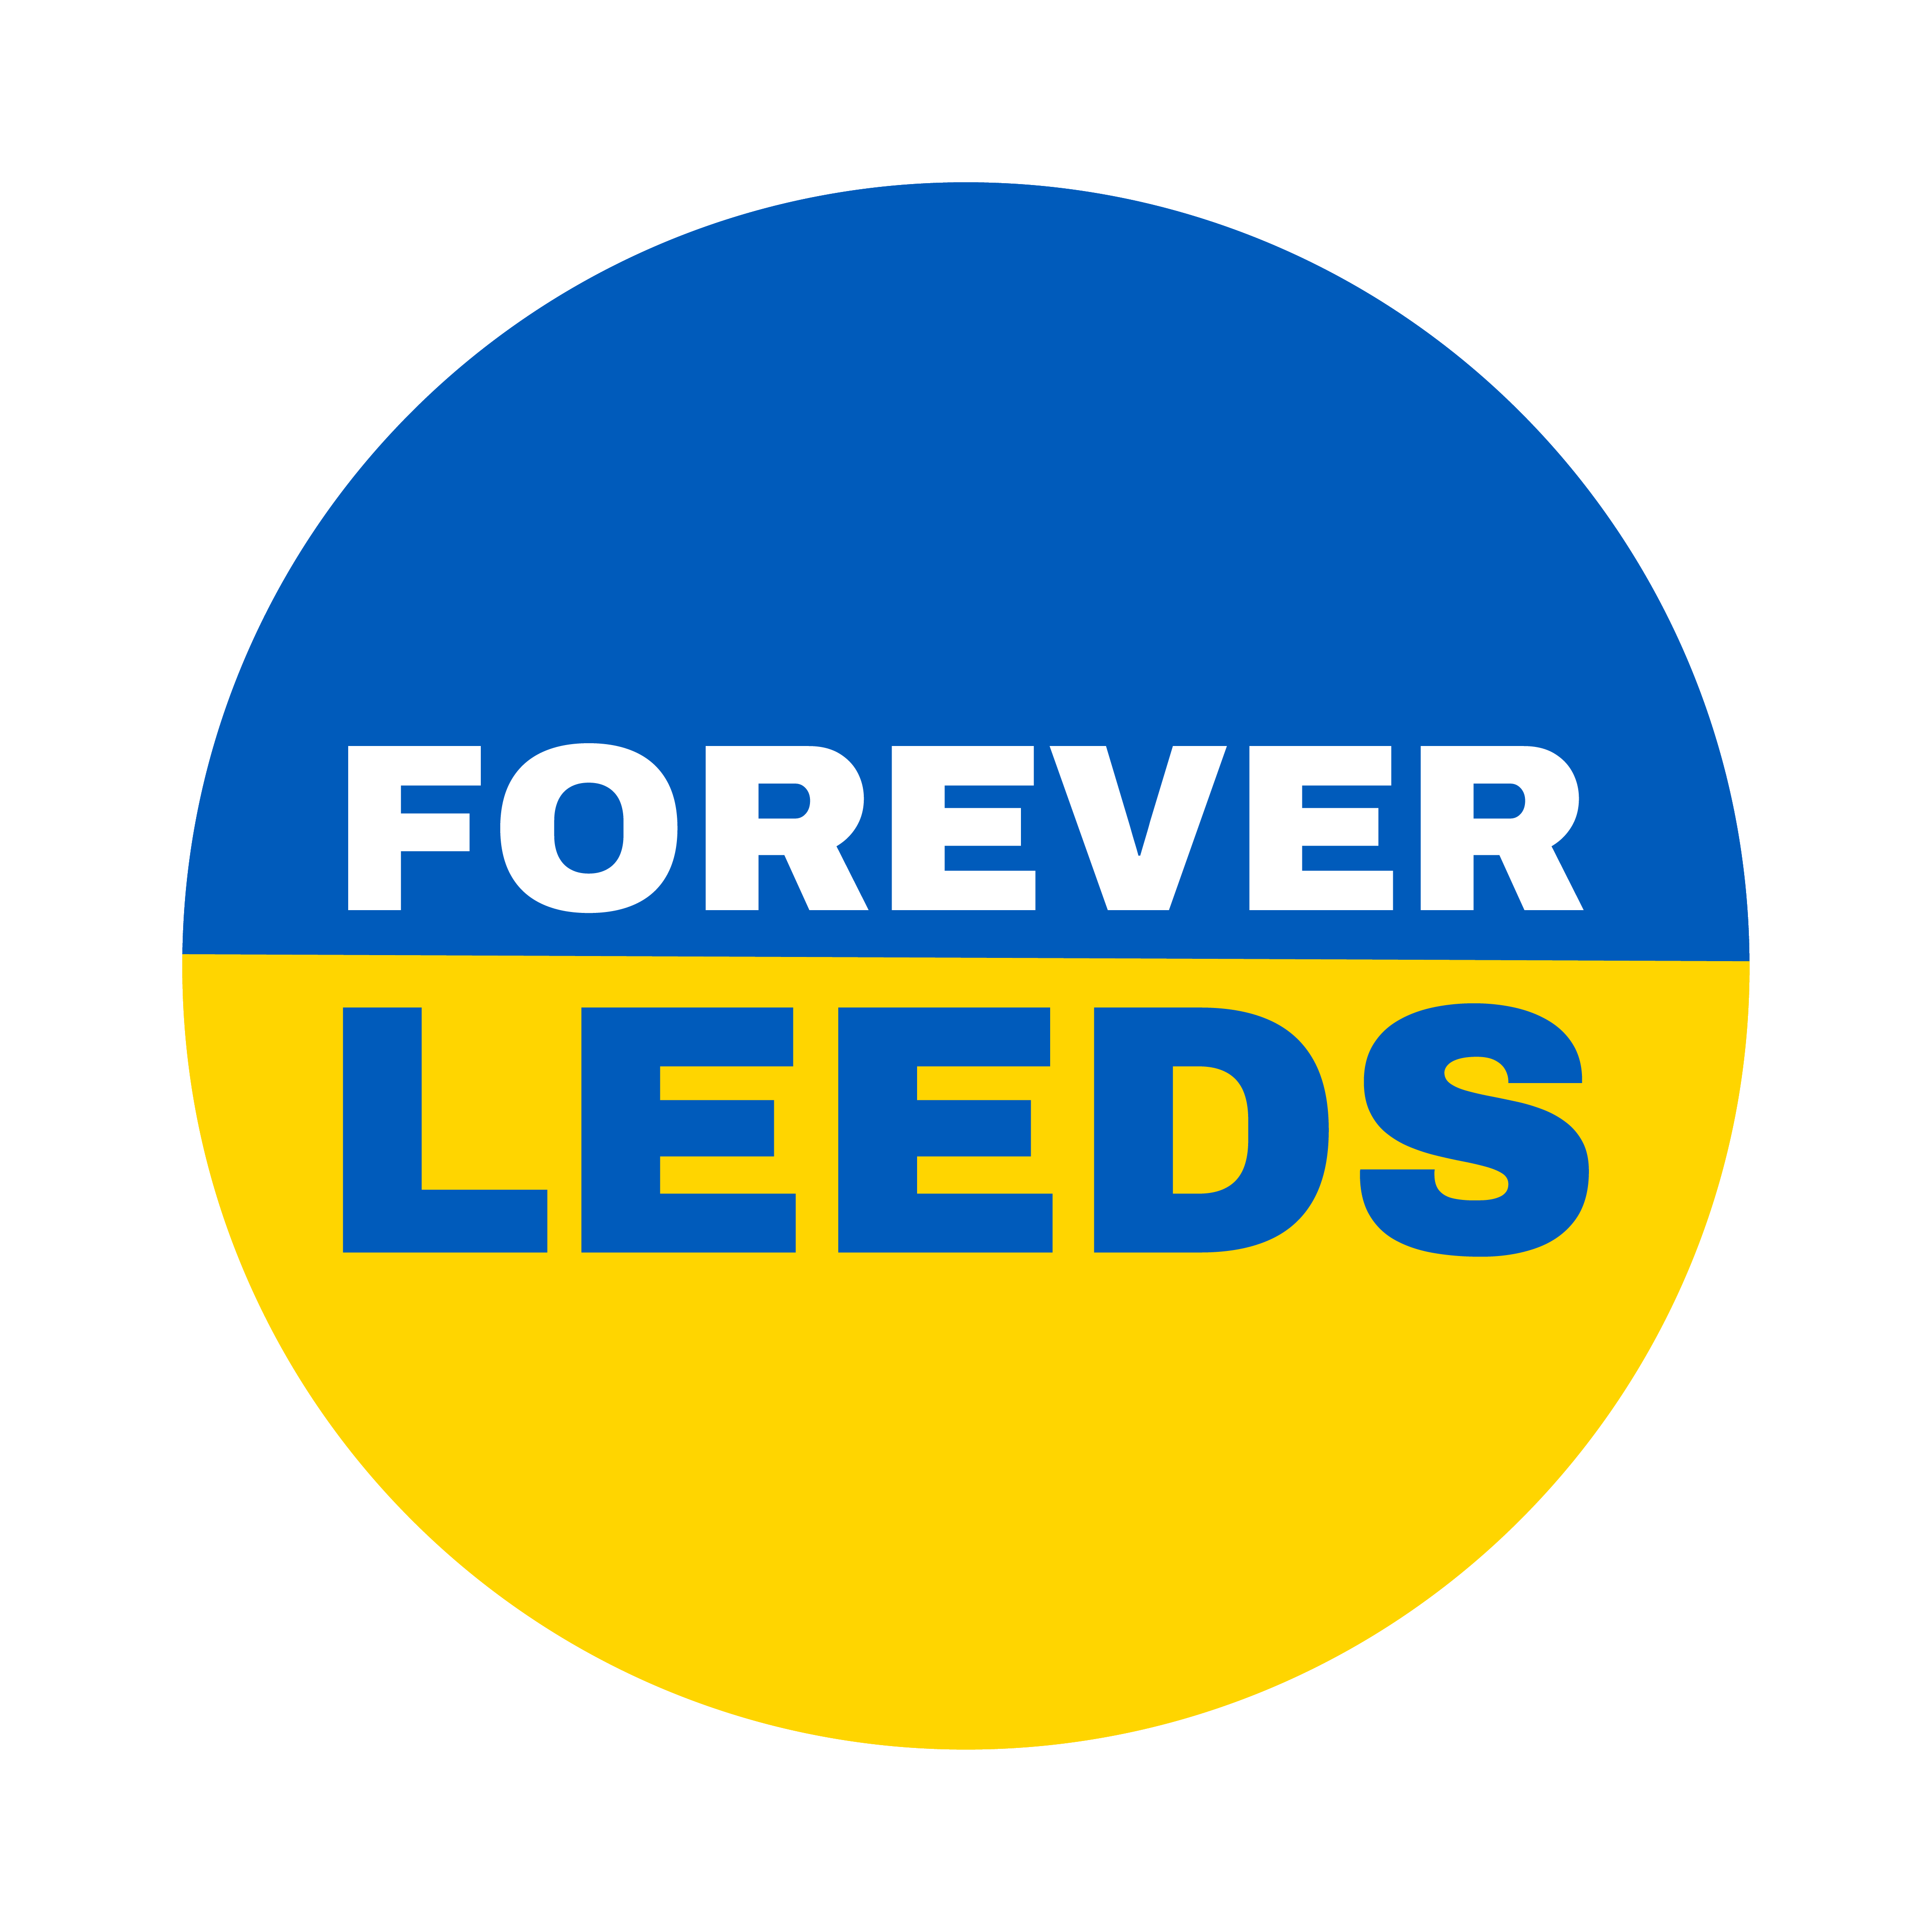 Forever Leeds